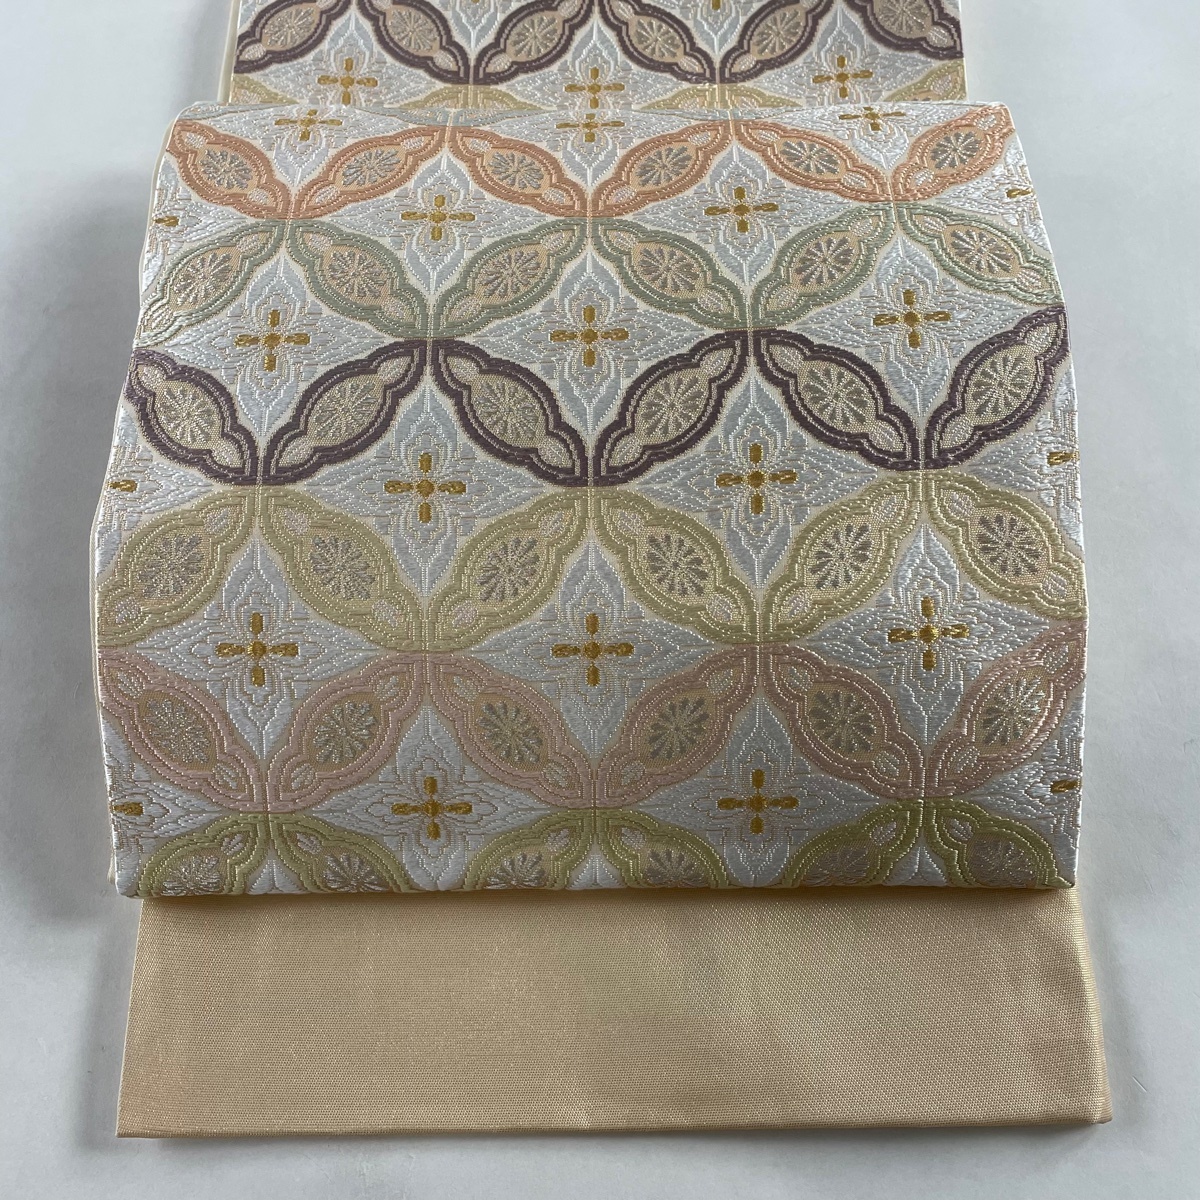 ヤフオク! -河合美術織物 袋帯の中古品・新品・未使用品一覧